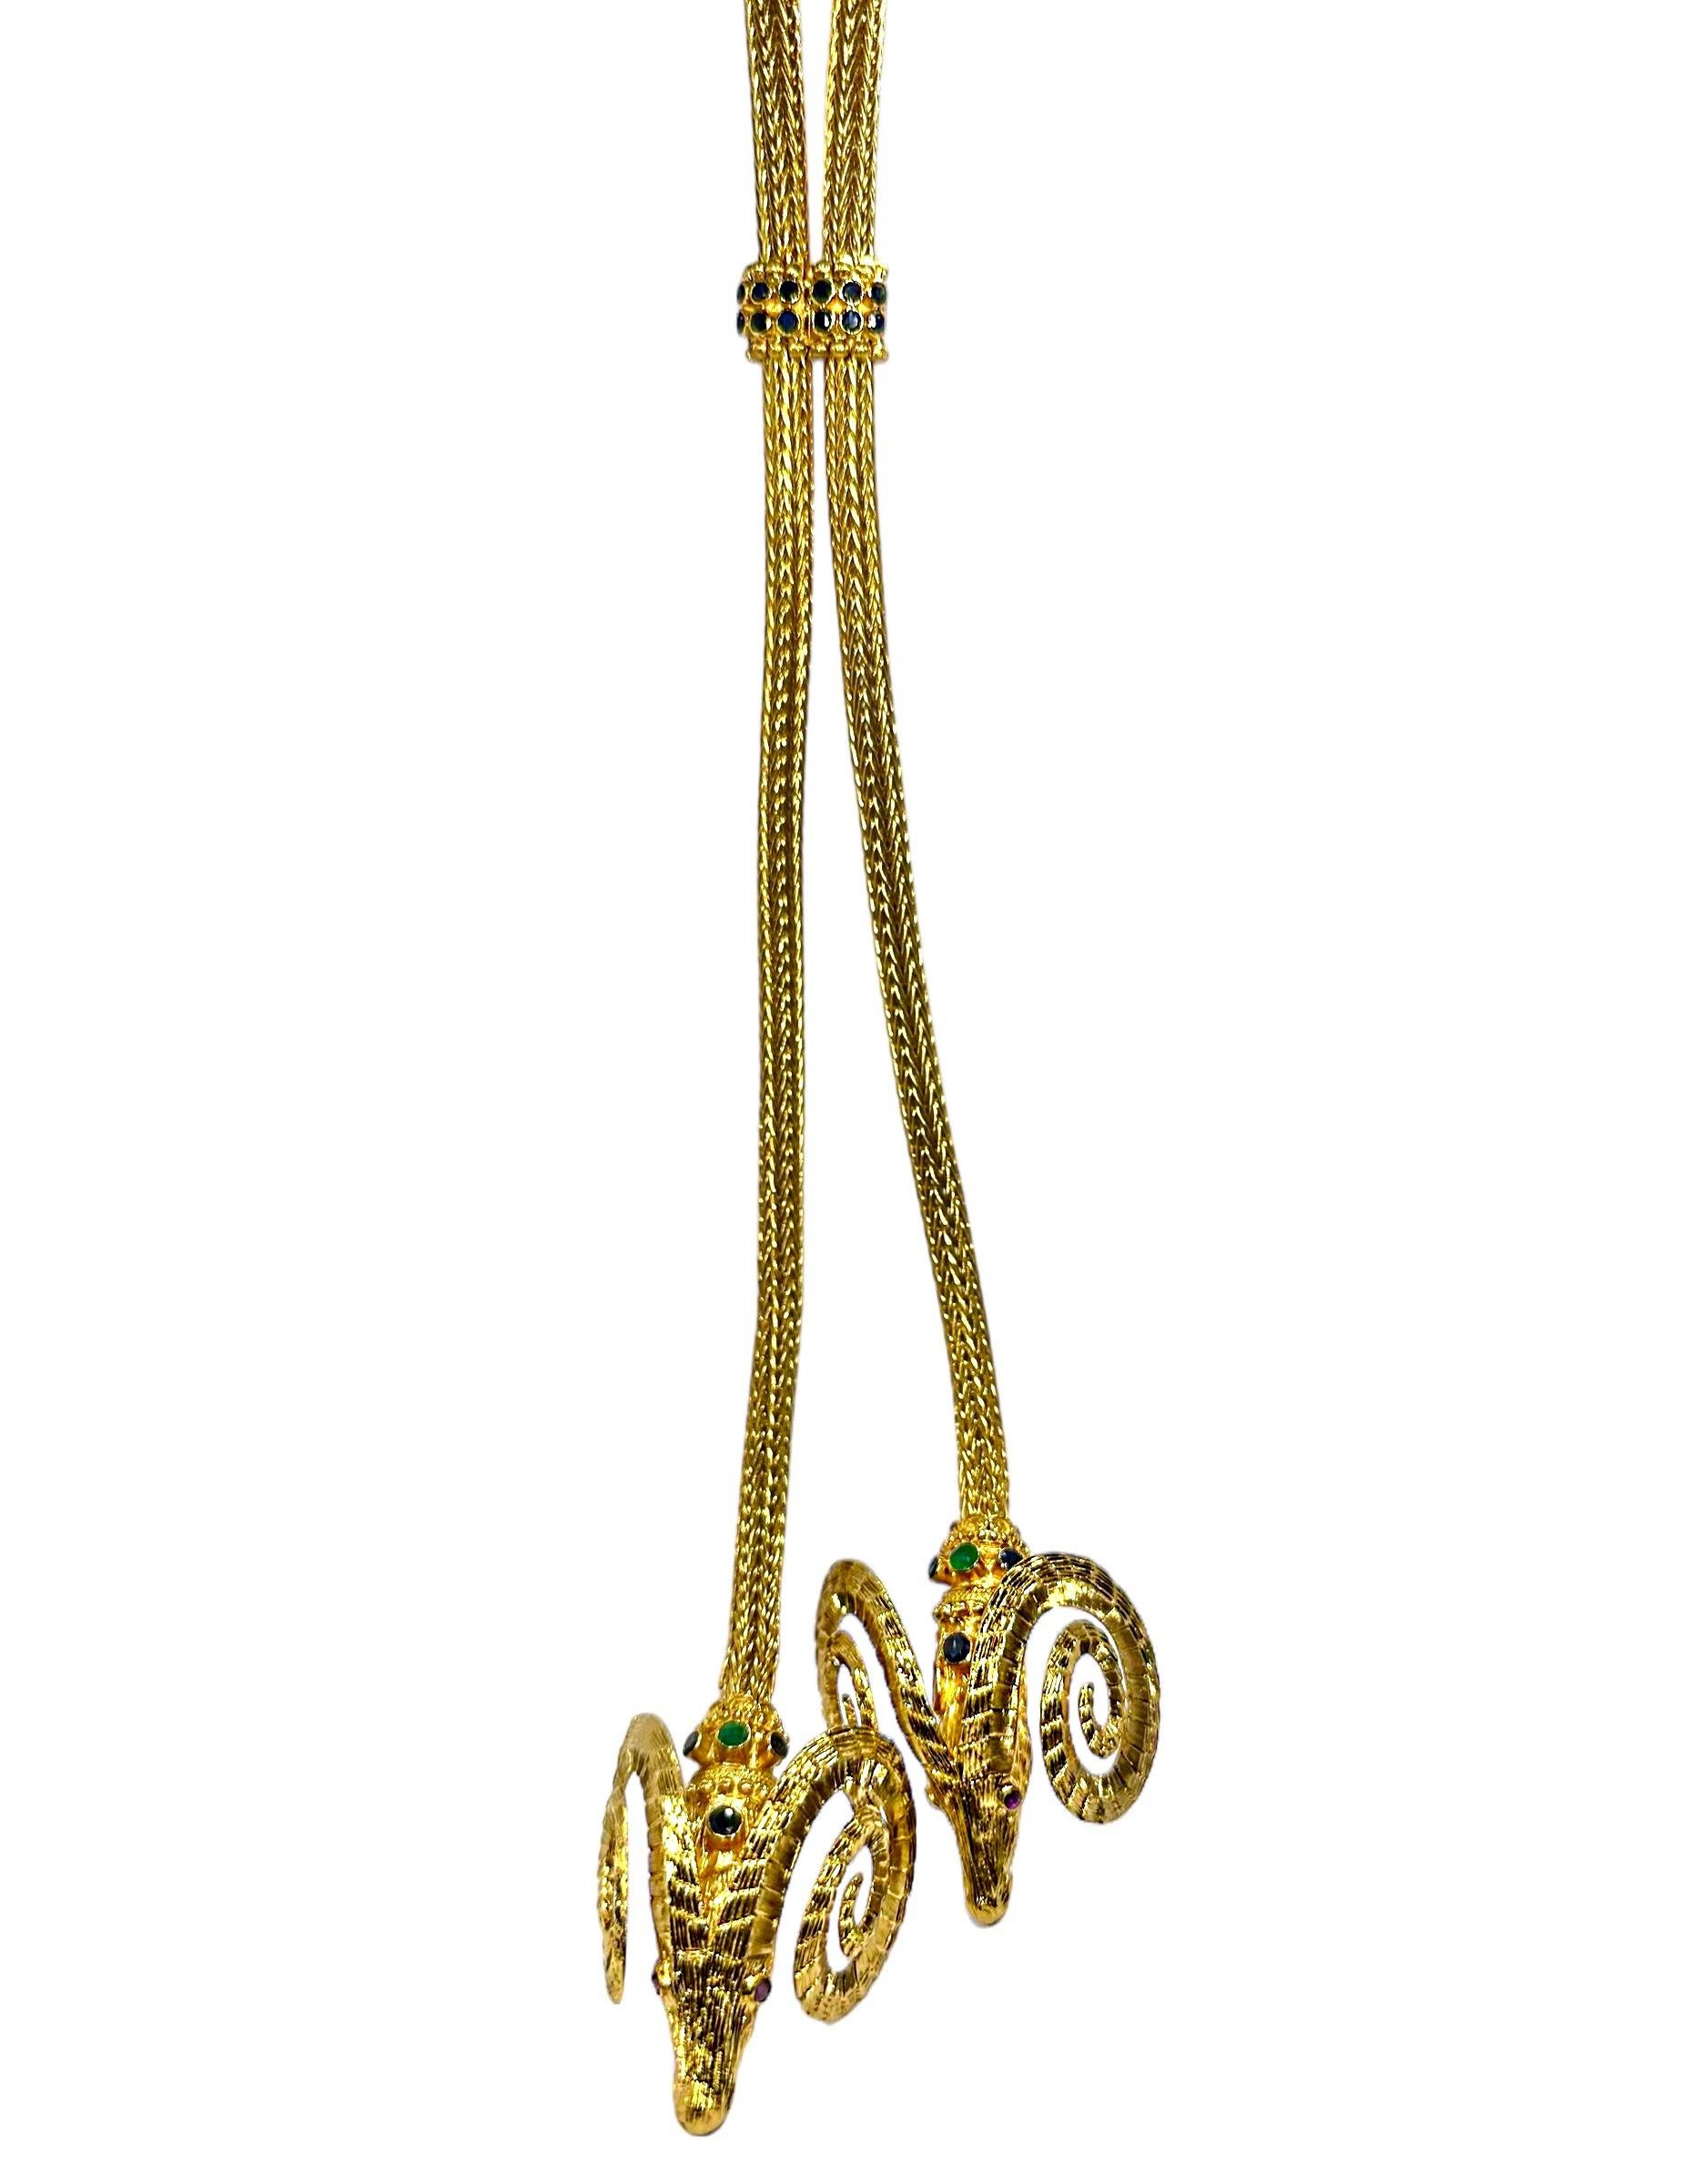 Monumentale Lalaounis 18k Gold Doppelter Widderkopf-Halskette in Monumentalgröße 38 Zoll lang Damen im Angebot